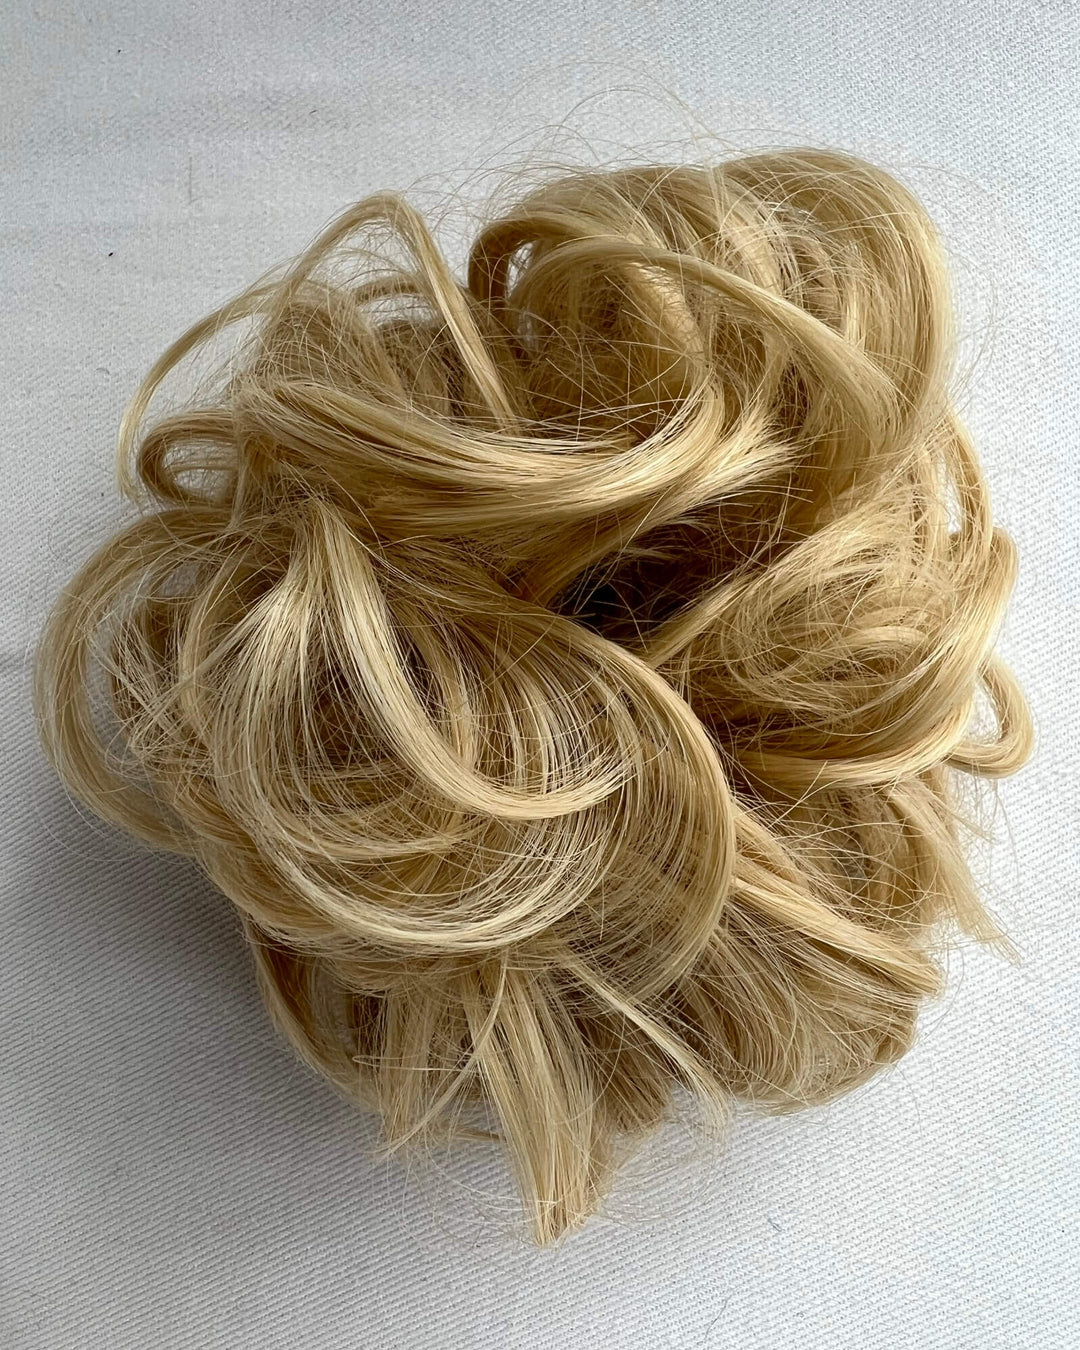 Apexhairs Blonde Hair Messy Bun